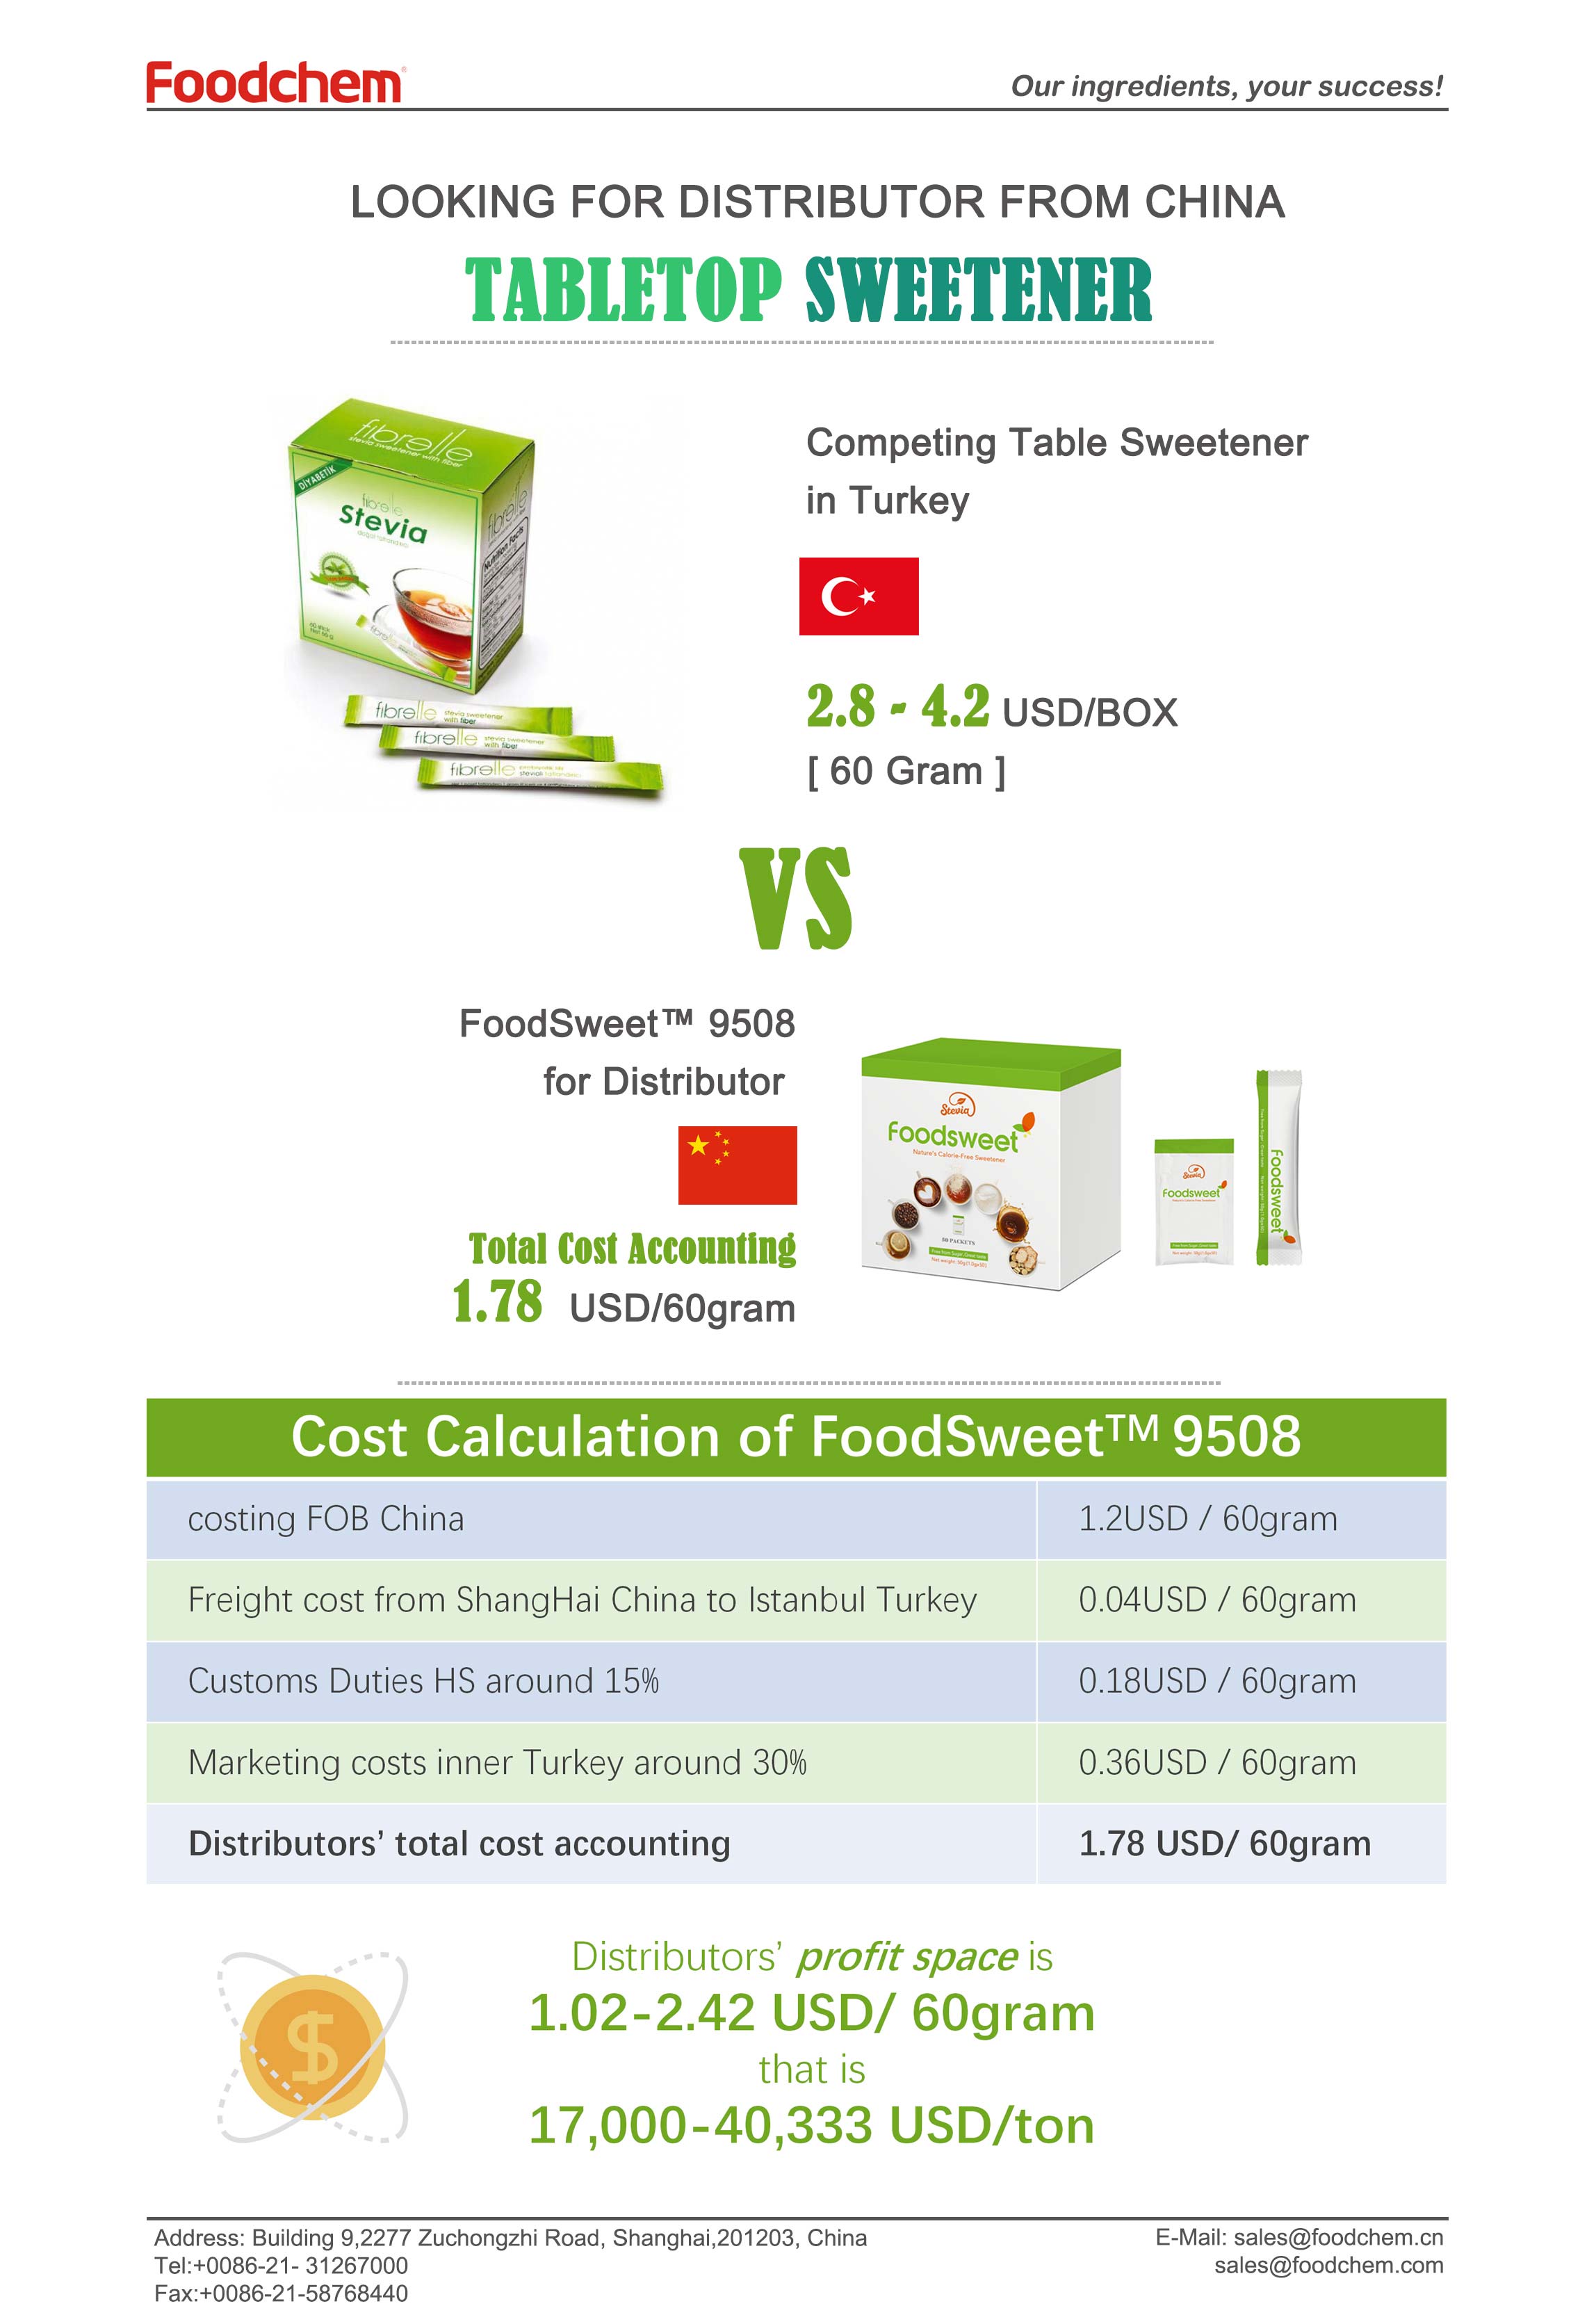 Foodsweet™ 9508